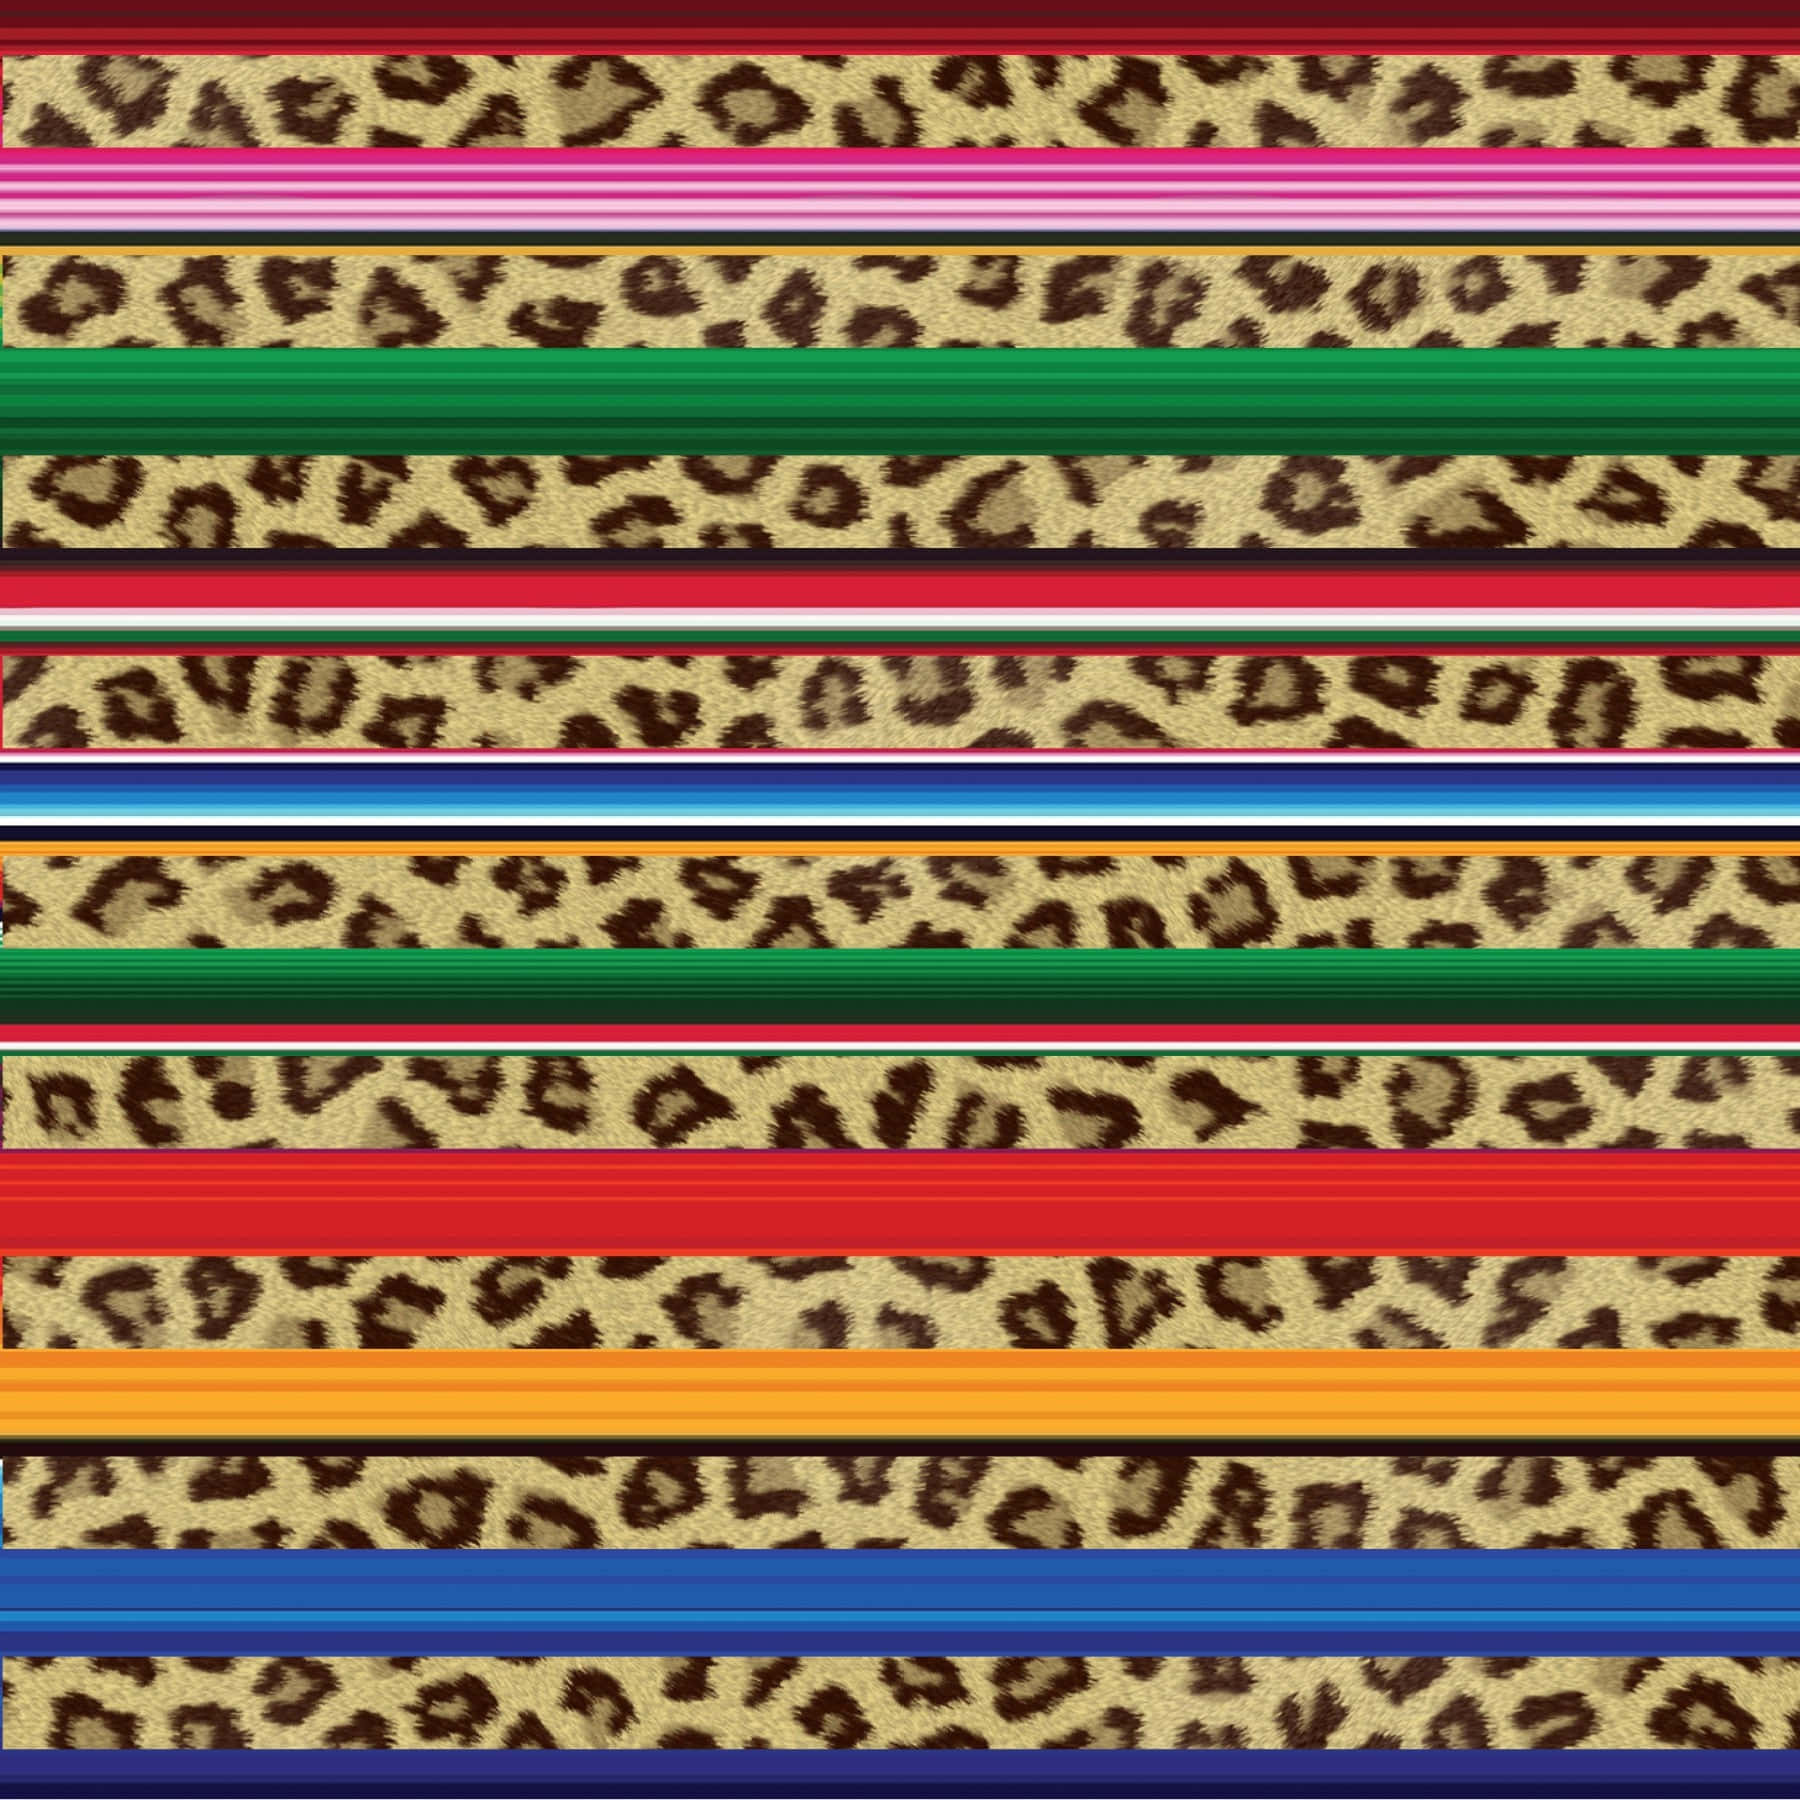 A Colorful Leopard Print Pencil Case Wallpaper